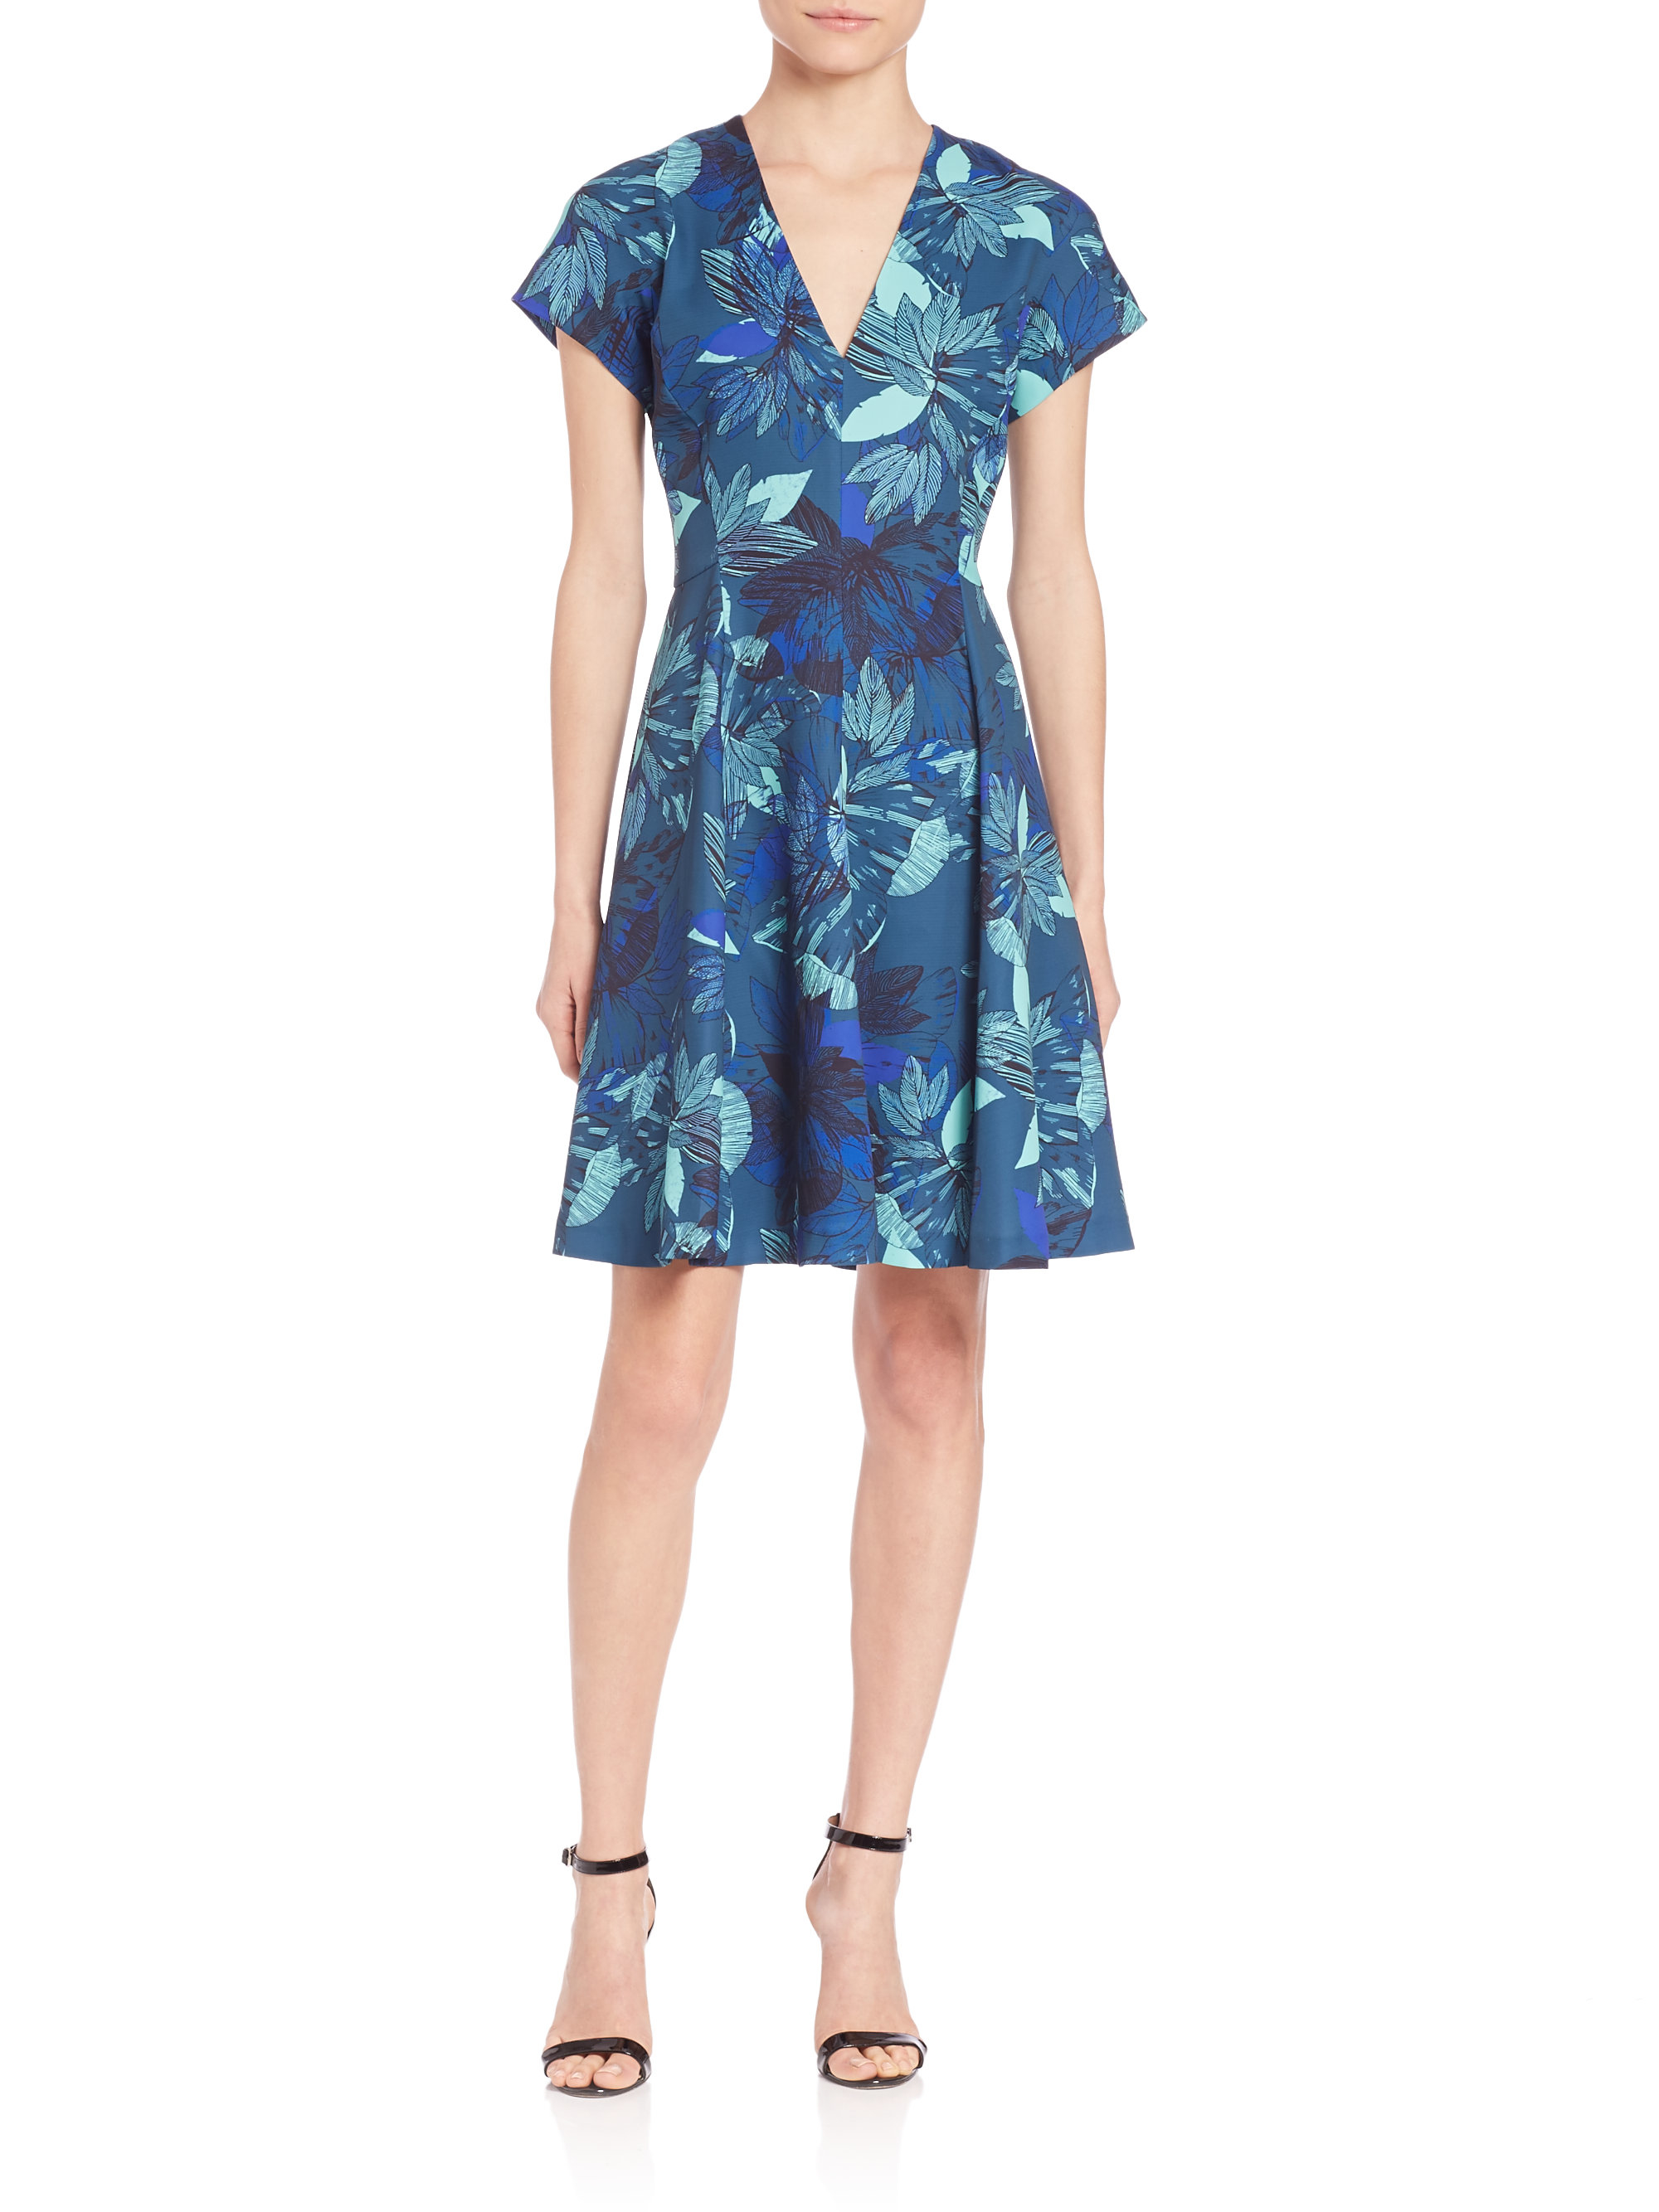 Lyst - Rebecca Taylor Tahitian Floral-print Dress in Blue